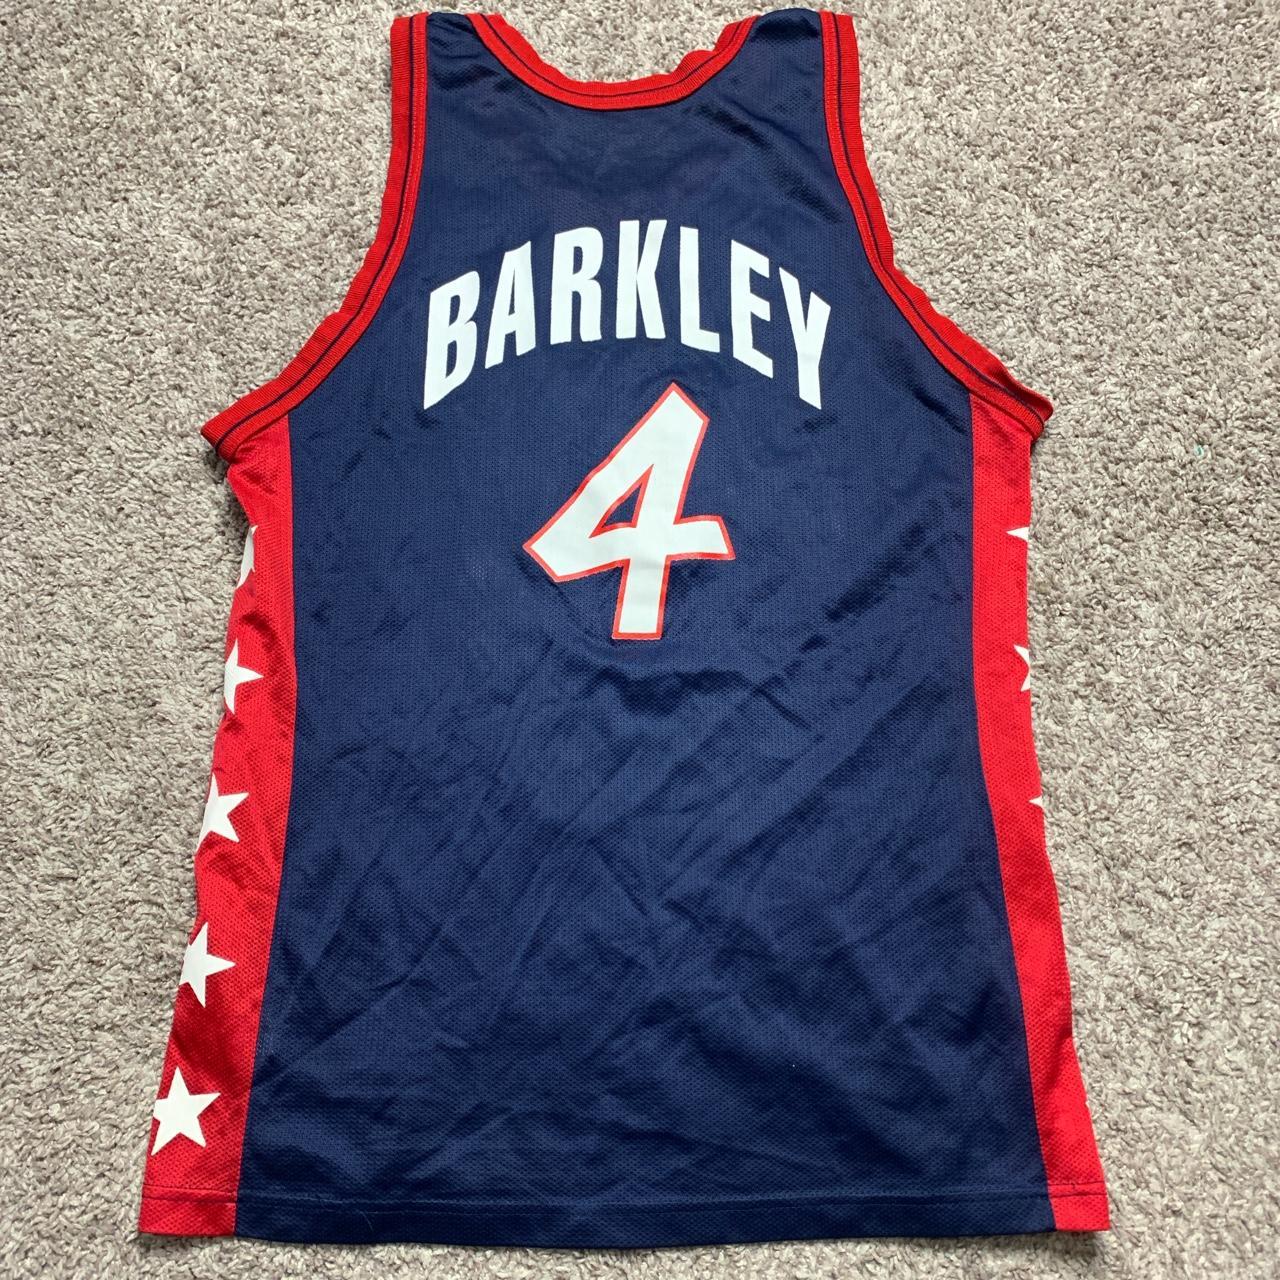 Charles Barkley Nike USA 1996 Jersey 